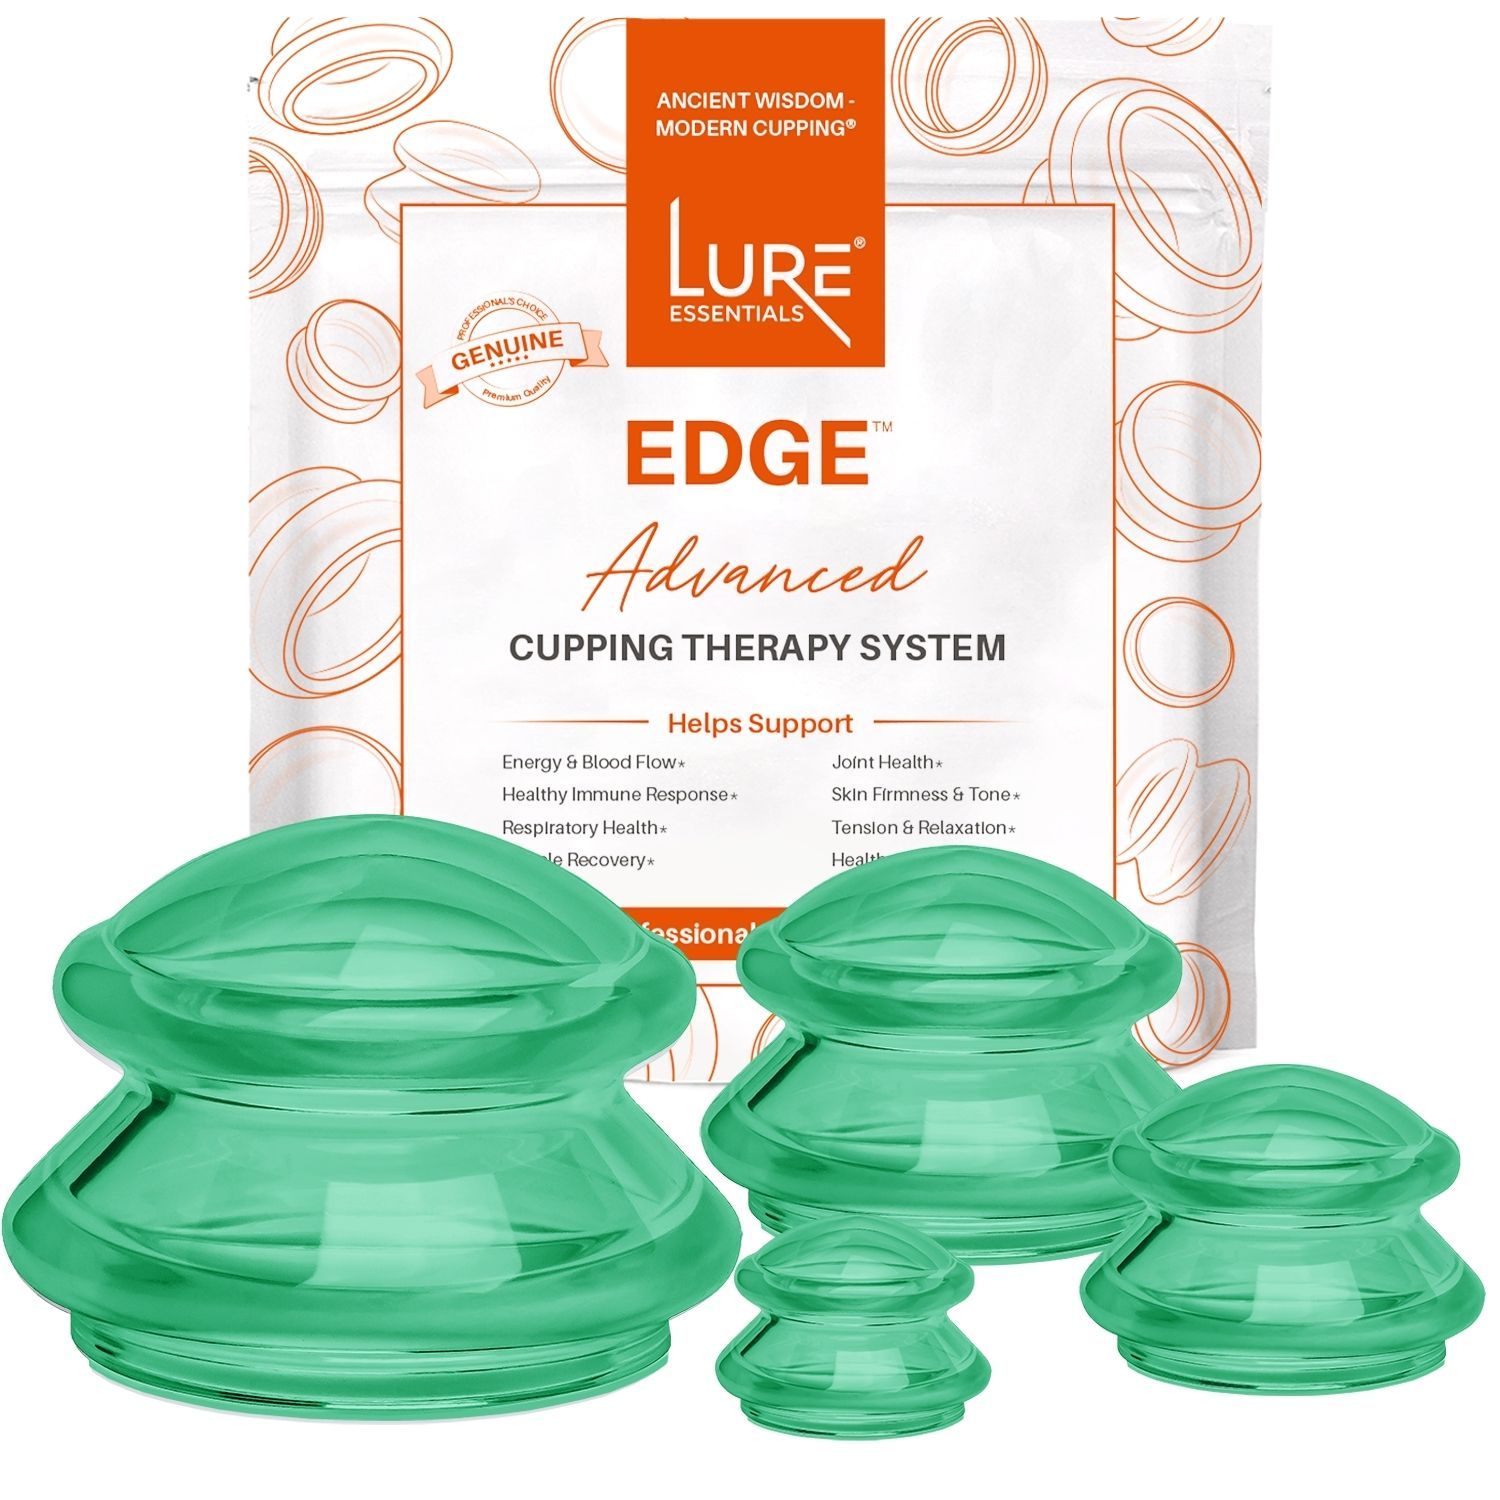 LURE Essentials Zen Cupping Therapy Kit Cupping للعلاج بالتدليك - أكواب  سيليكون - أكواب تدليك الحجامة